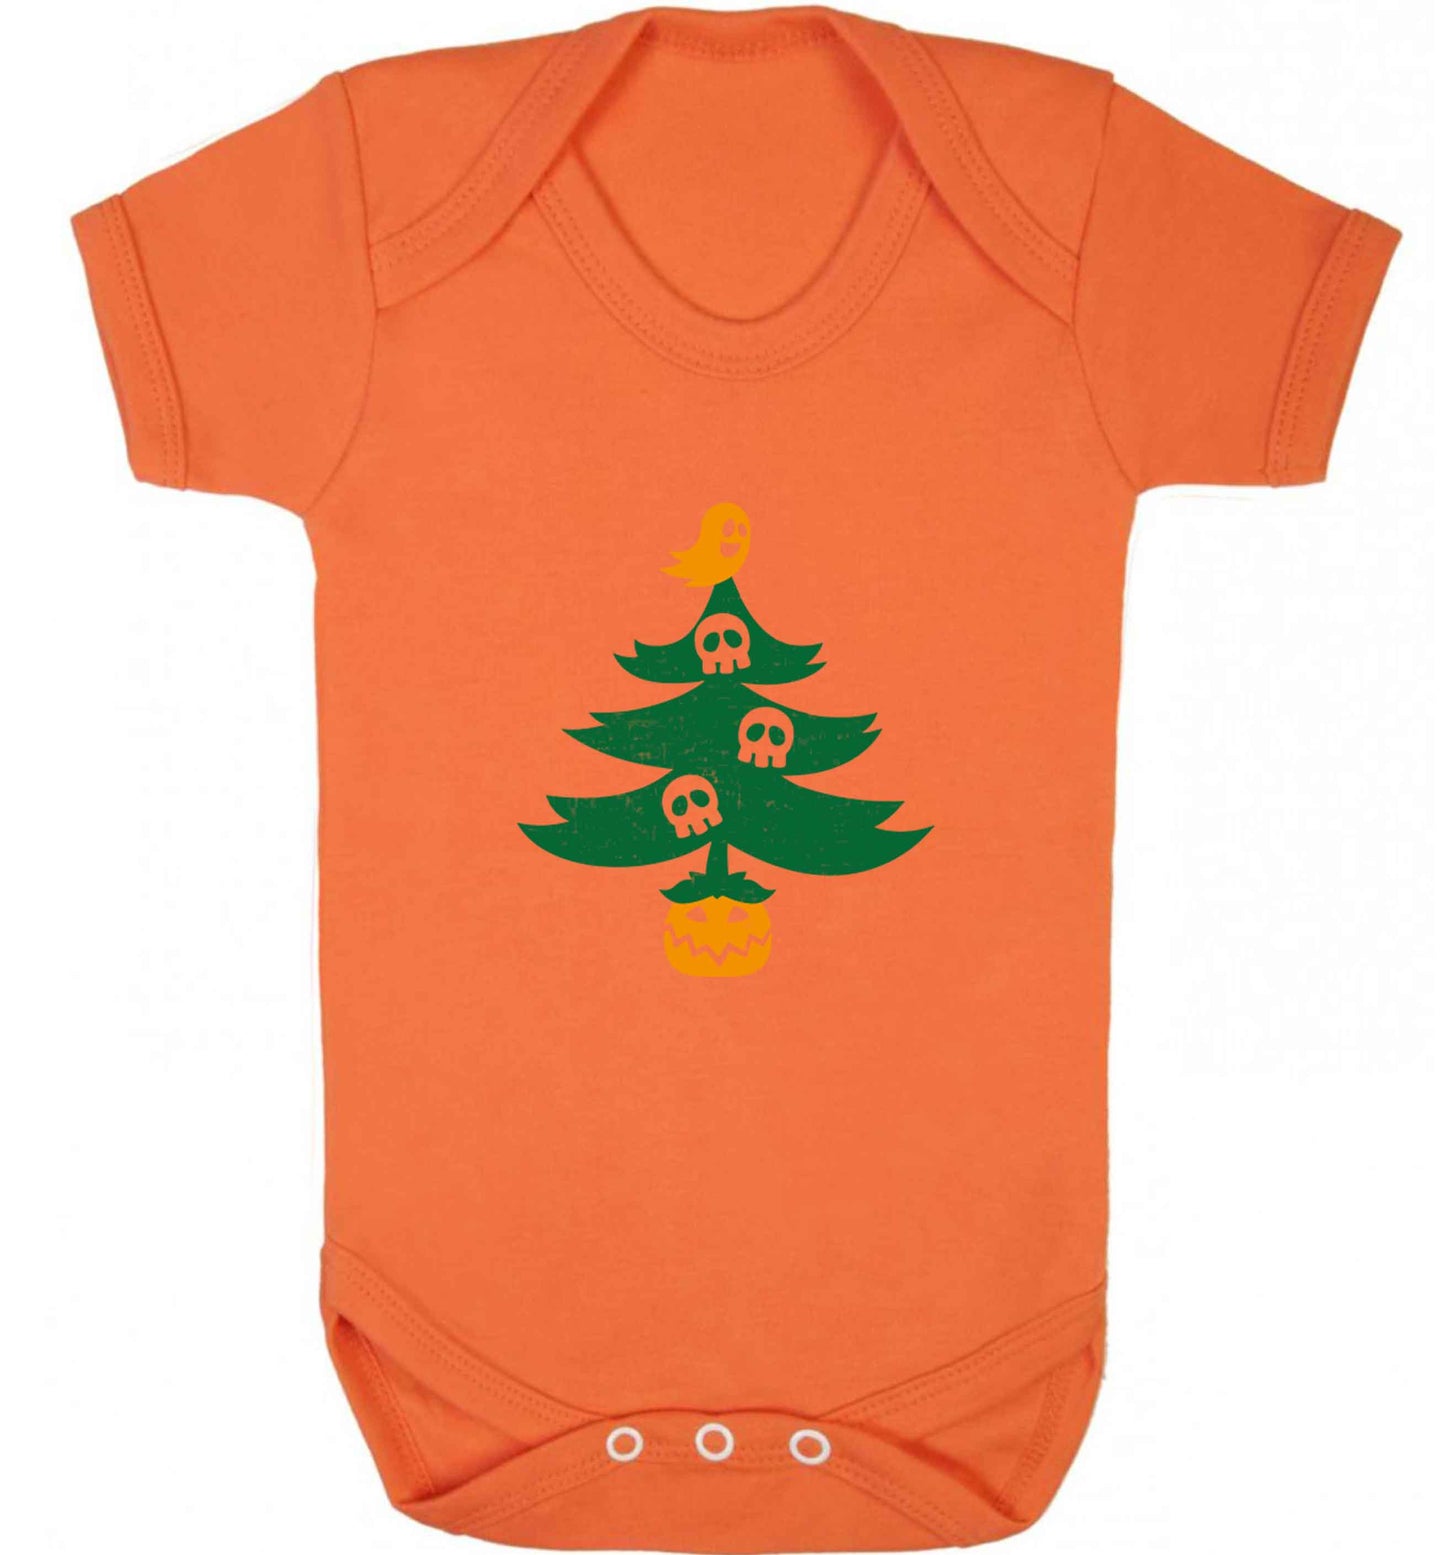 Halloween Christmas tree baby vest orange 18-24 months